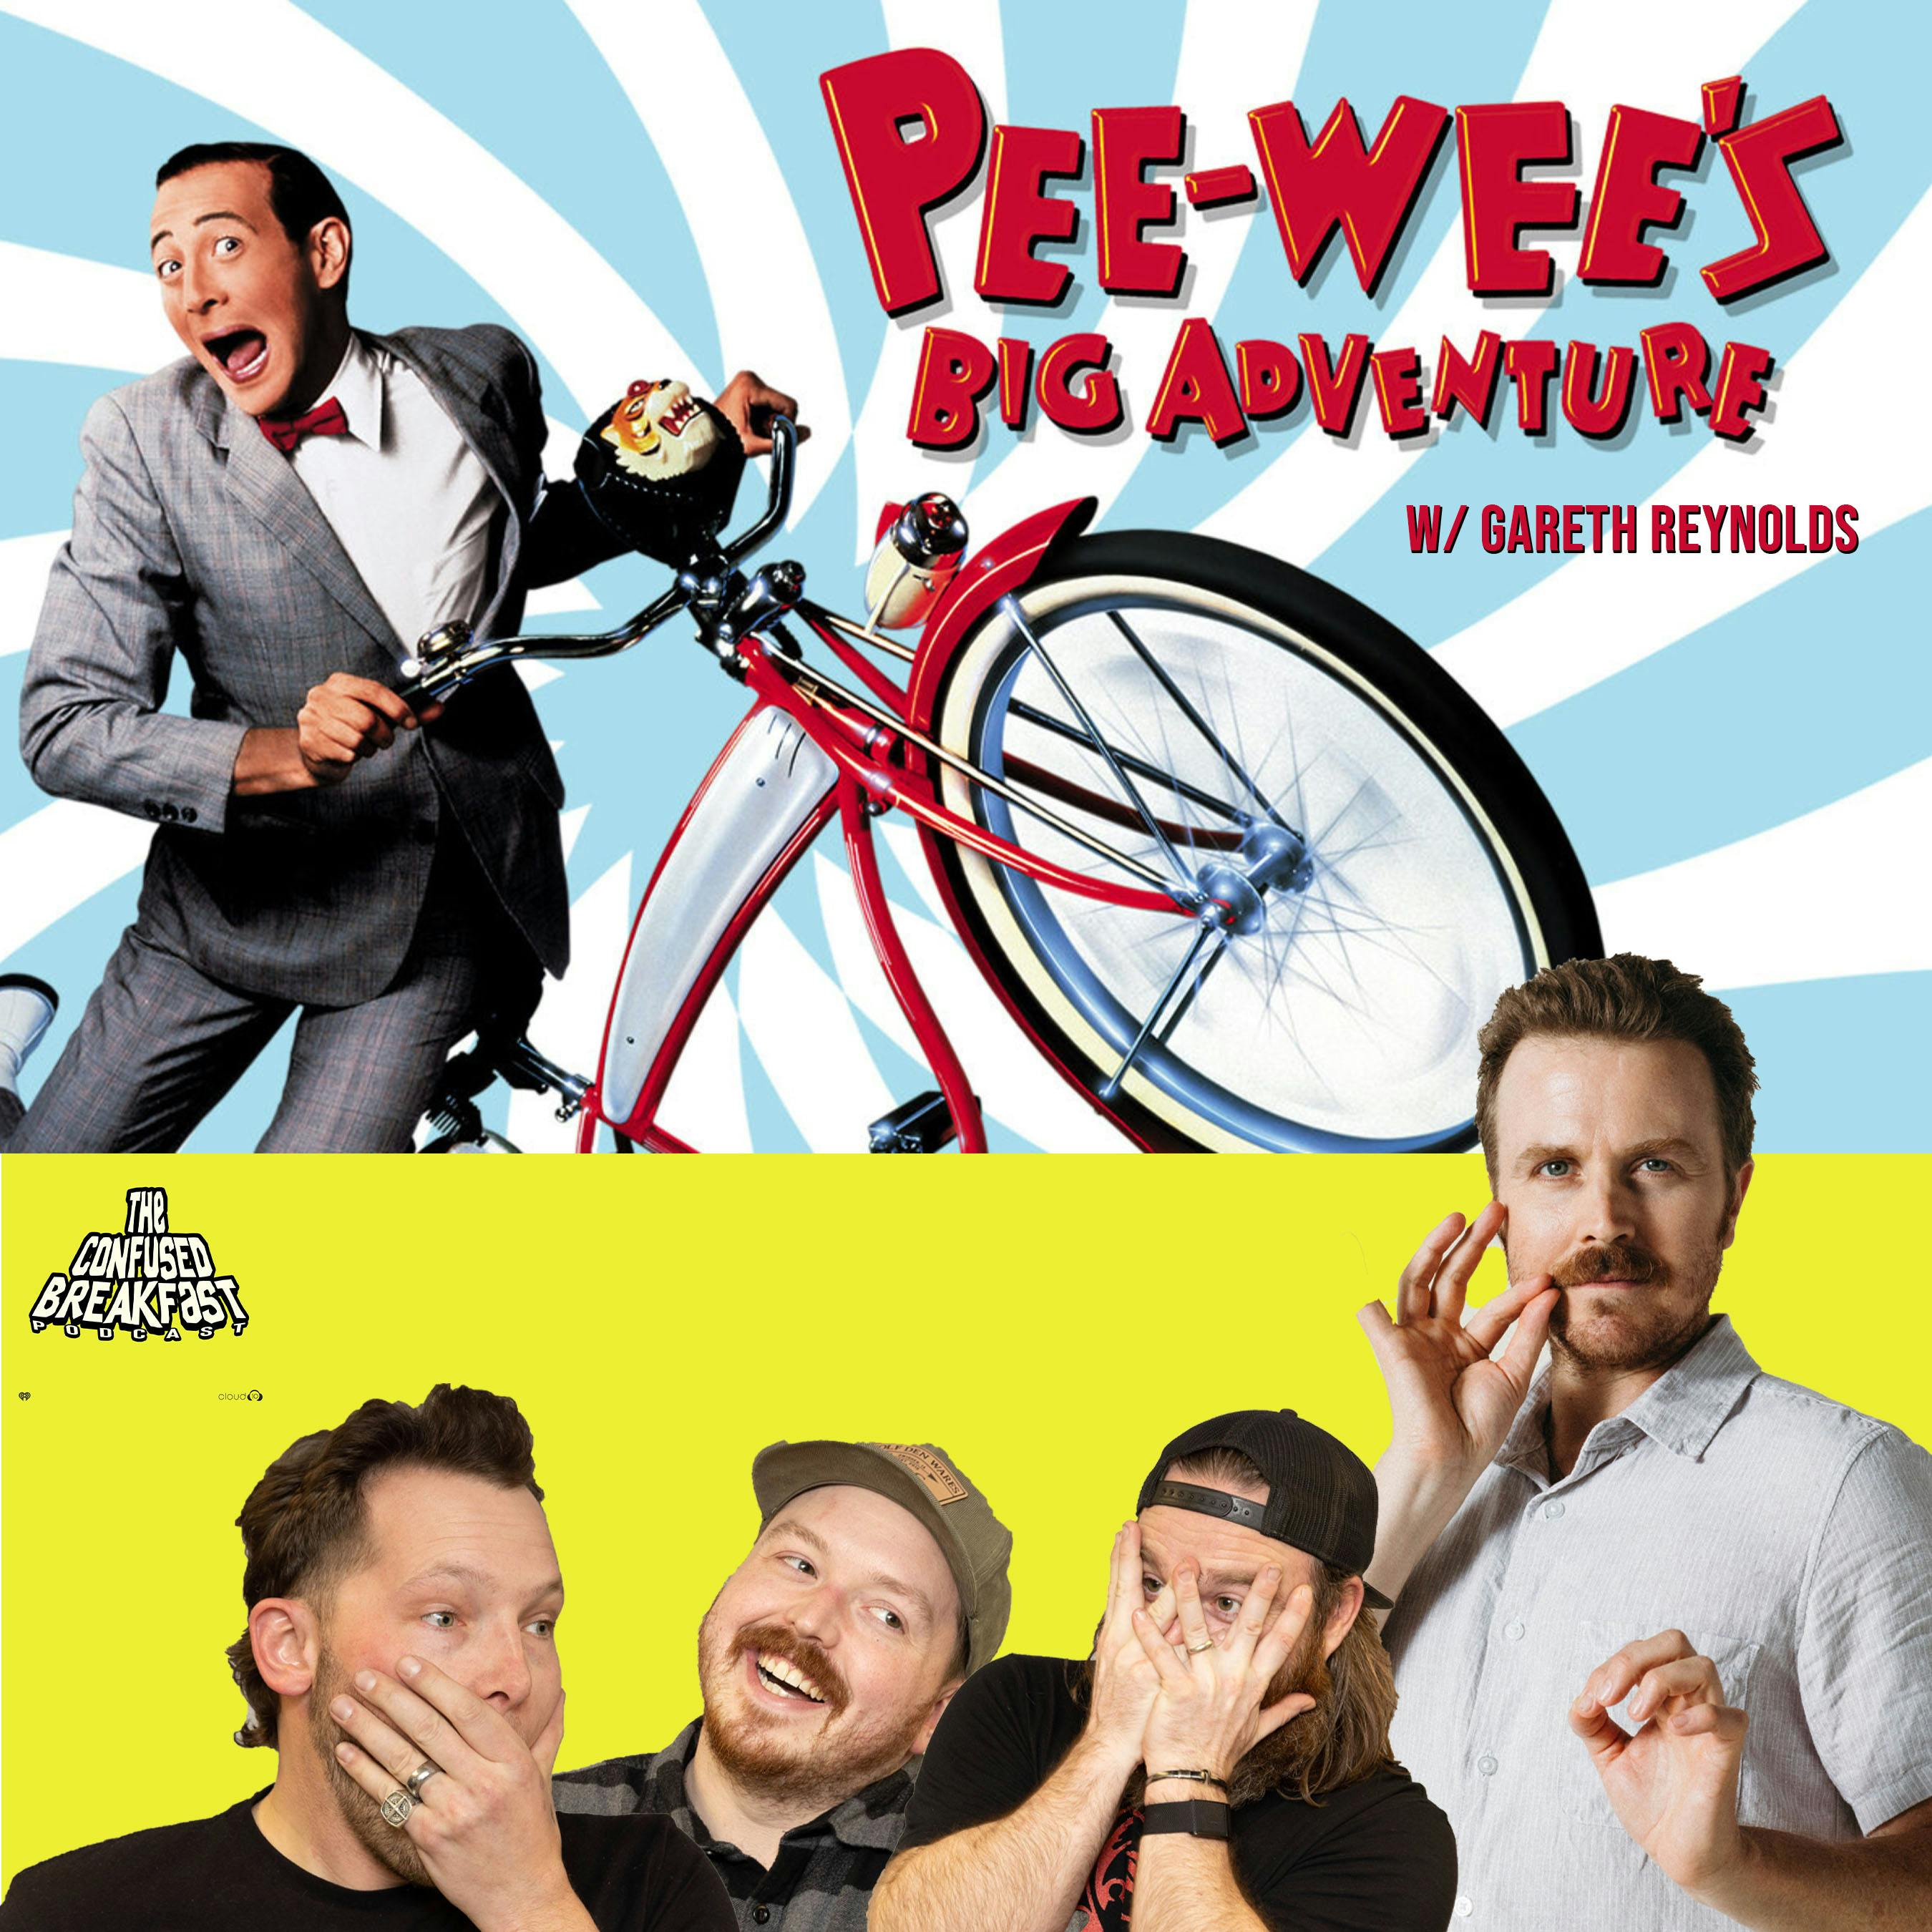 Pee-wee's Big Adventure (1985) with Gareth Reynolds